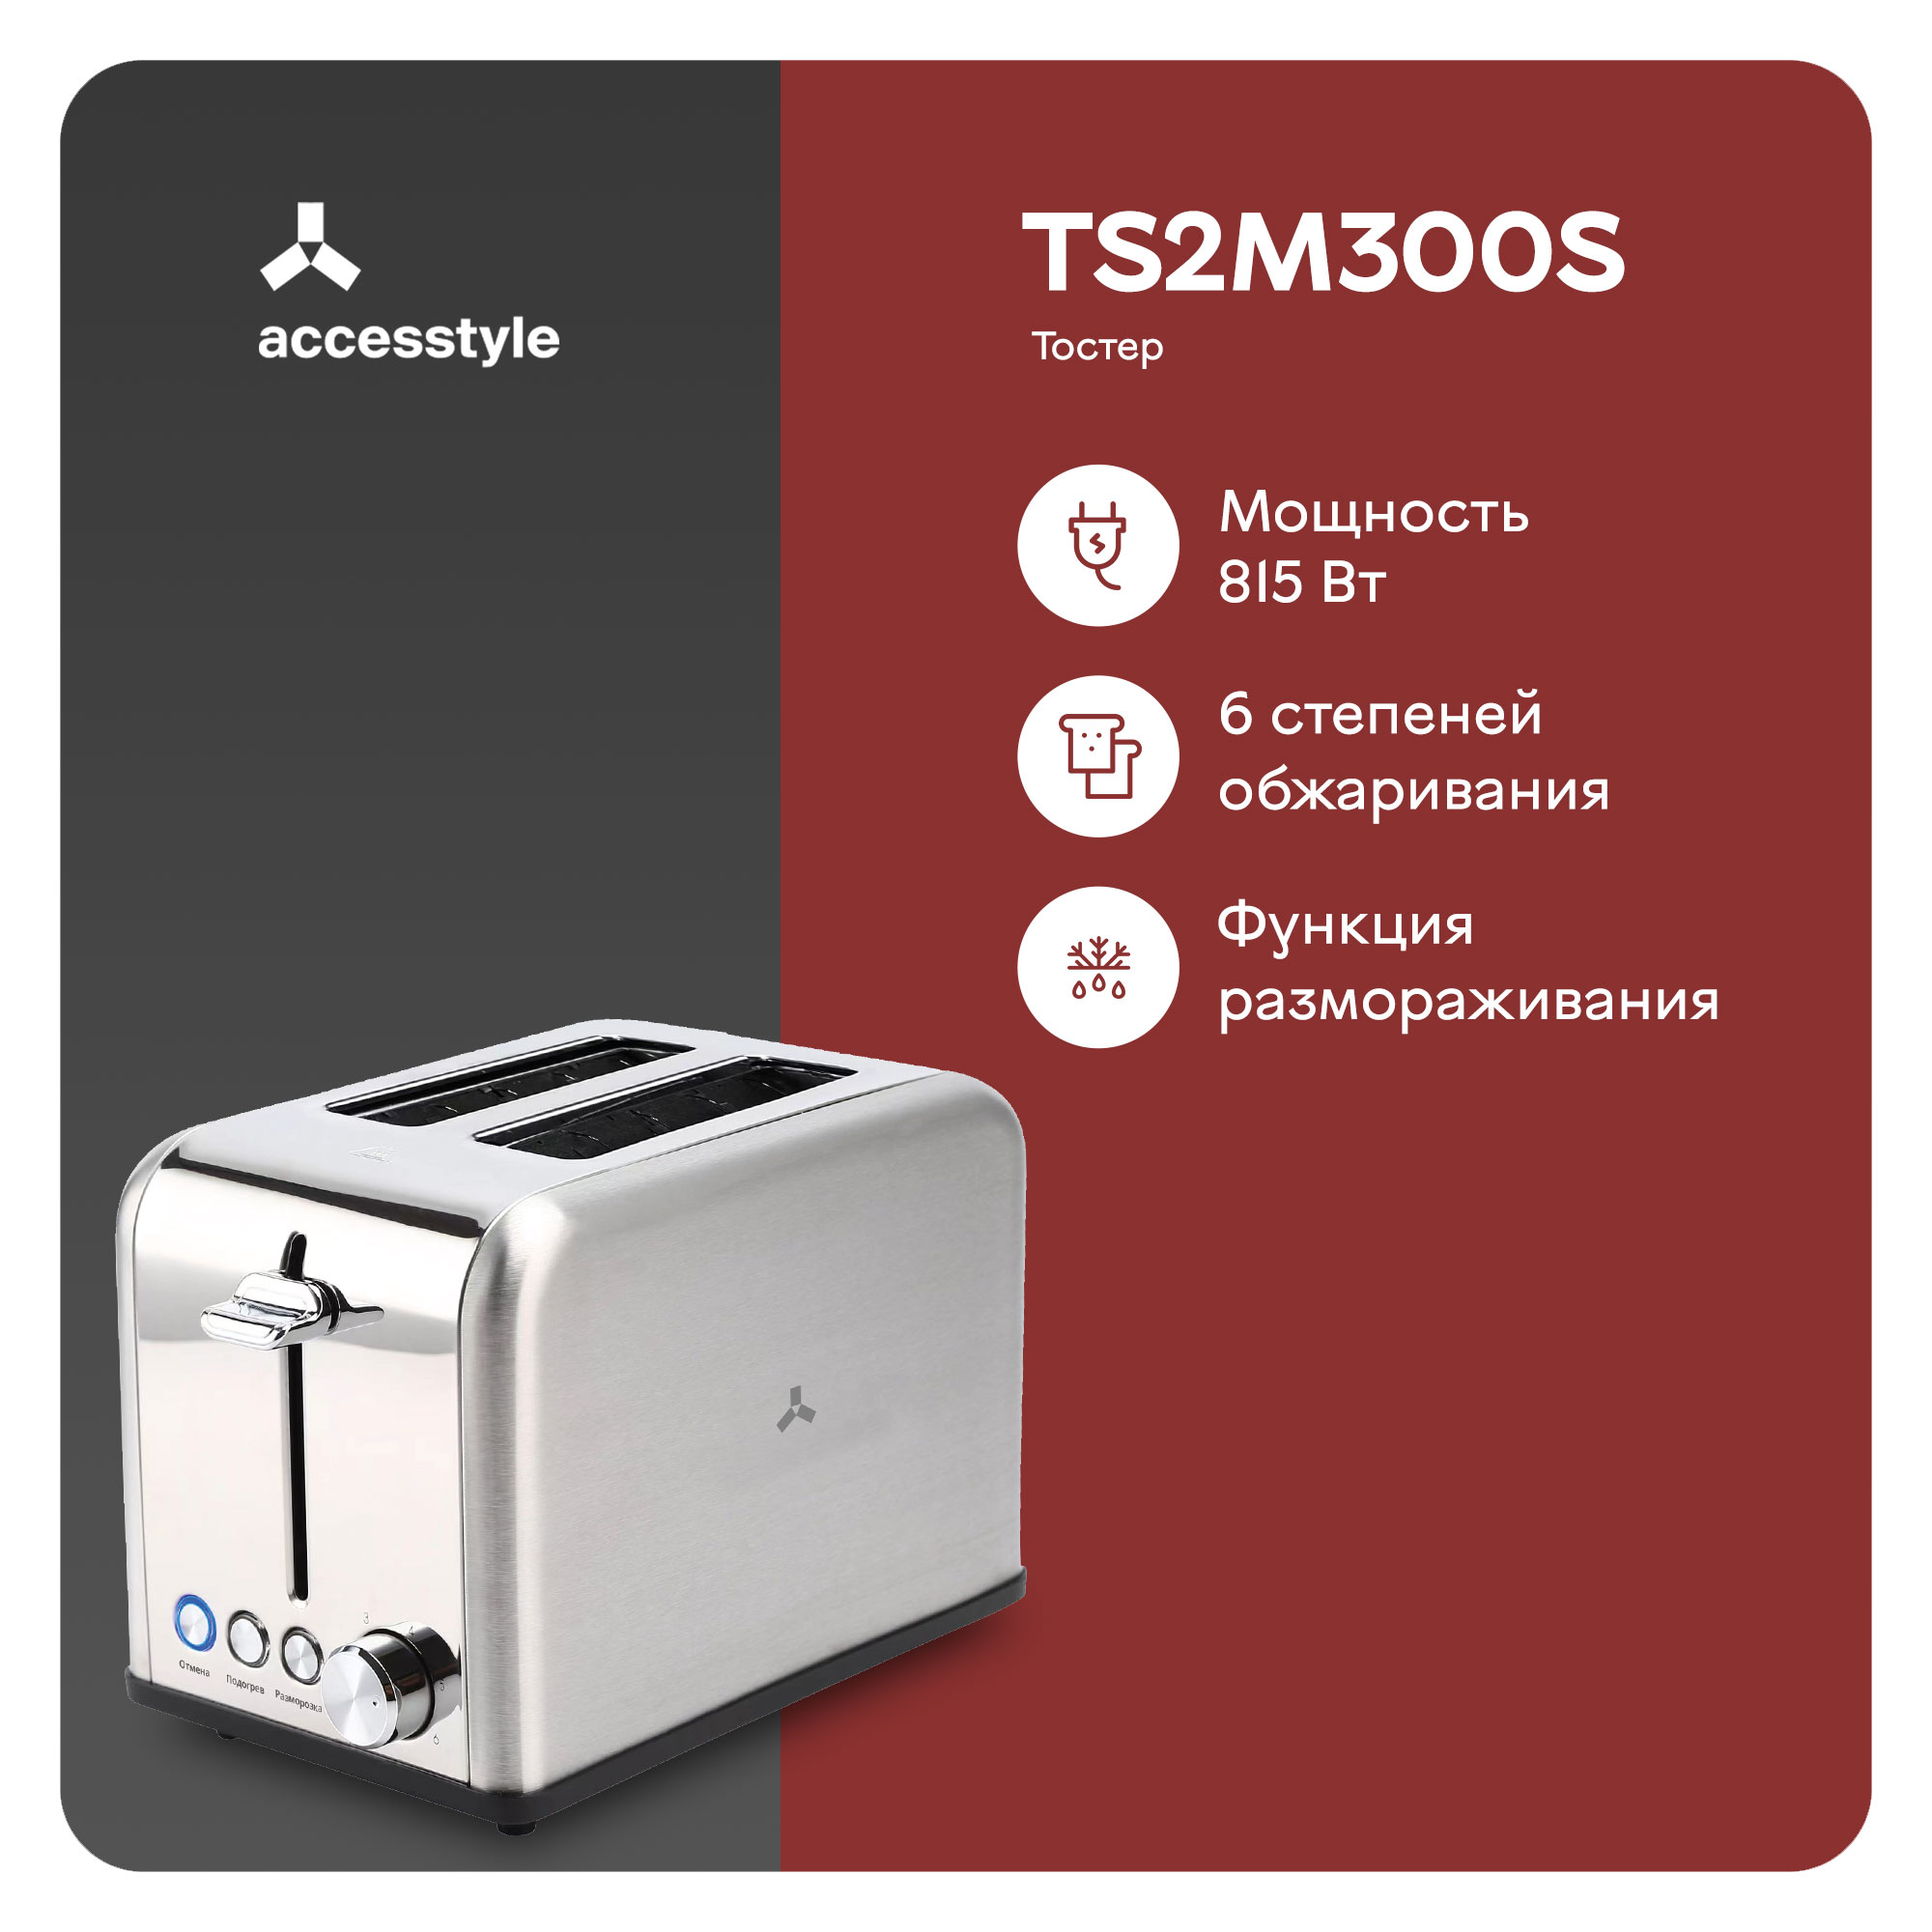 Тостер Accesstyle TS2M300S серебристый тостер accesstyle ts2m300s серебристый